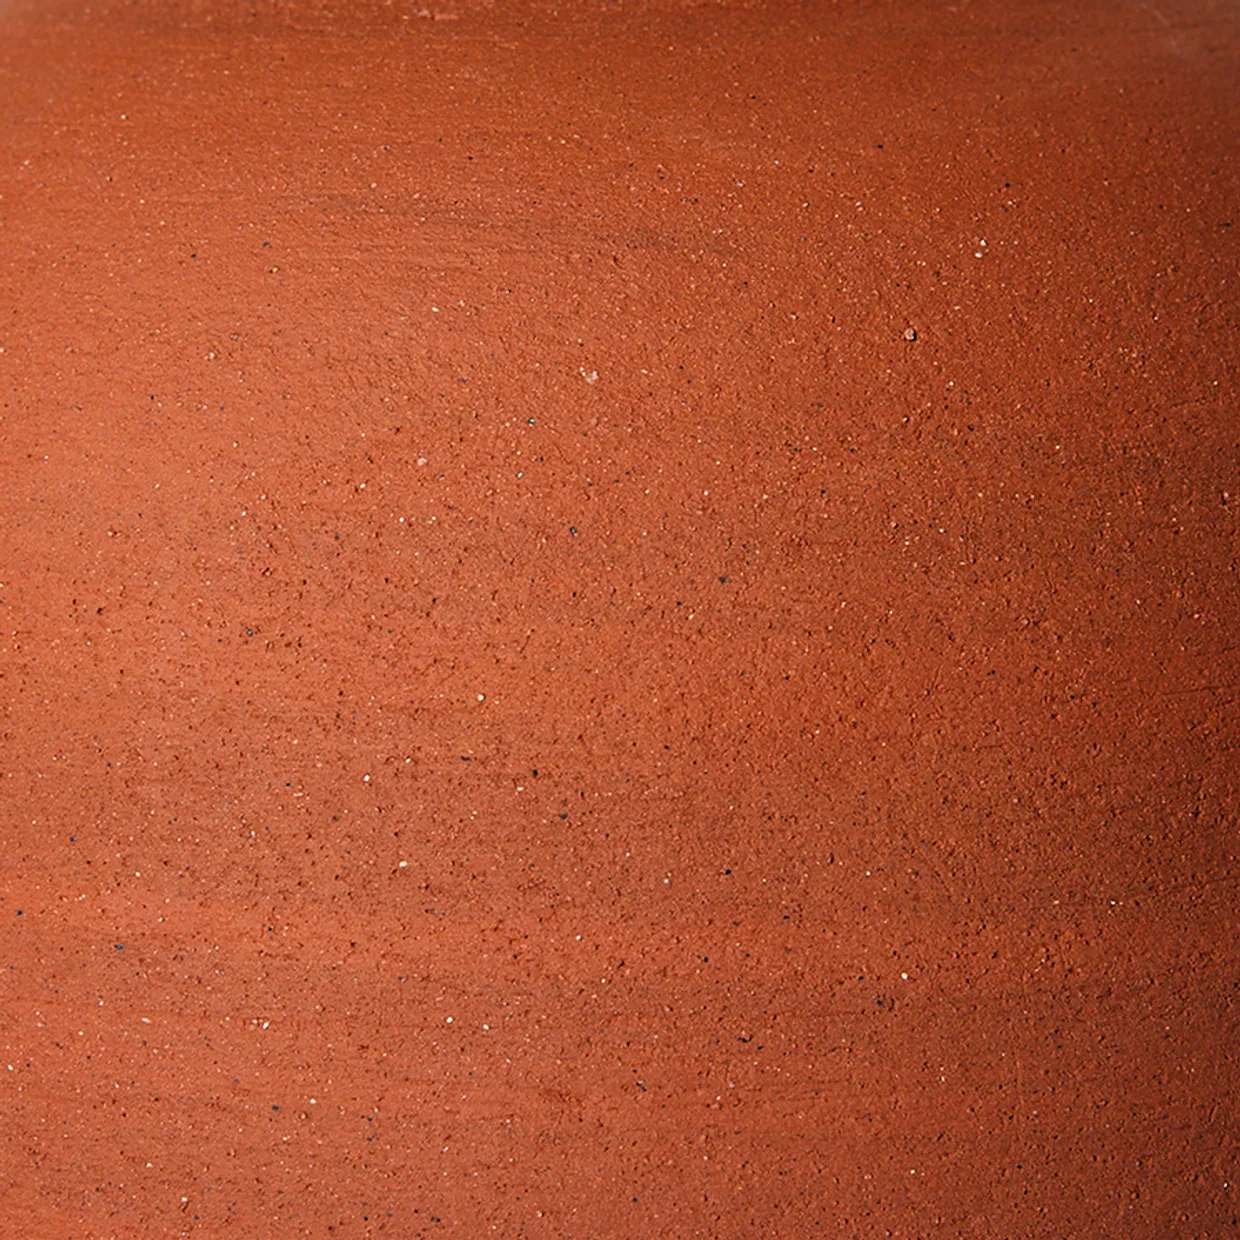 HK Objects: terracotta vase